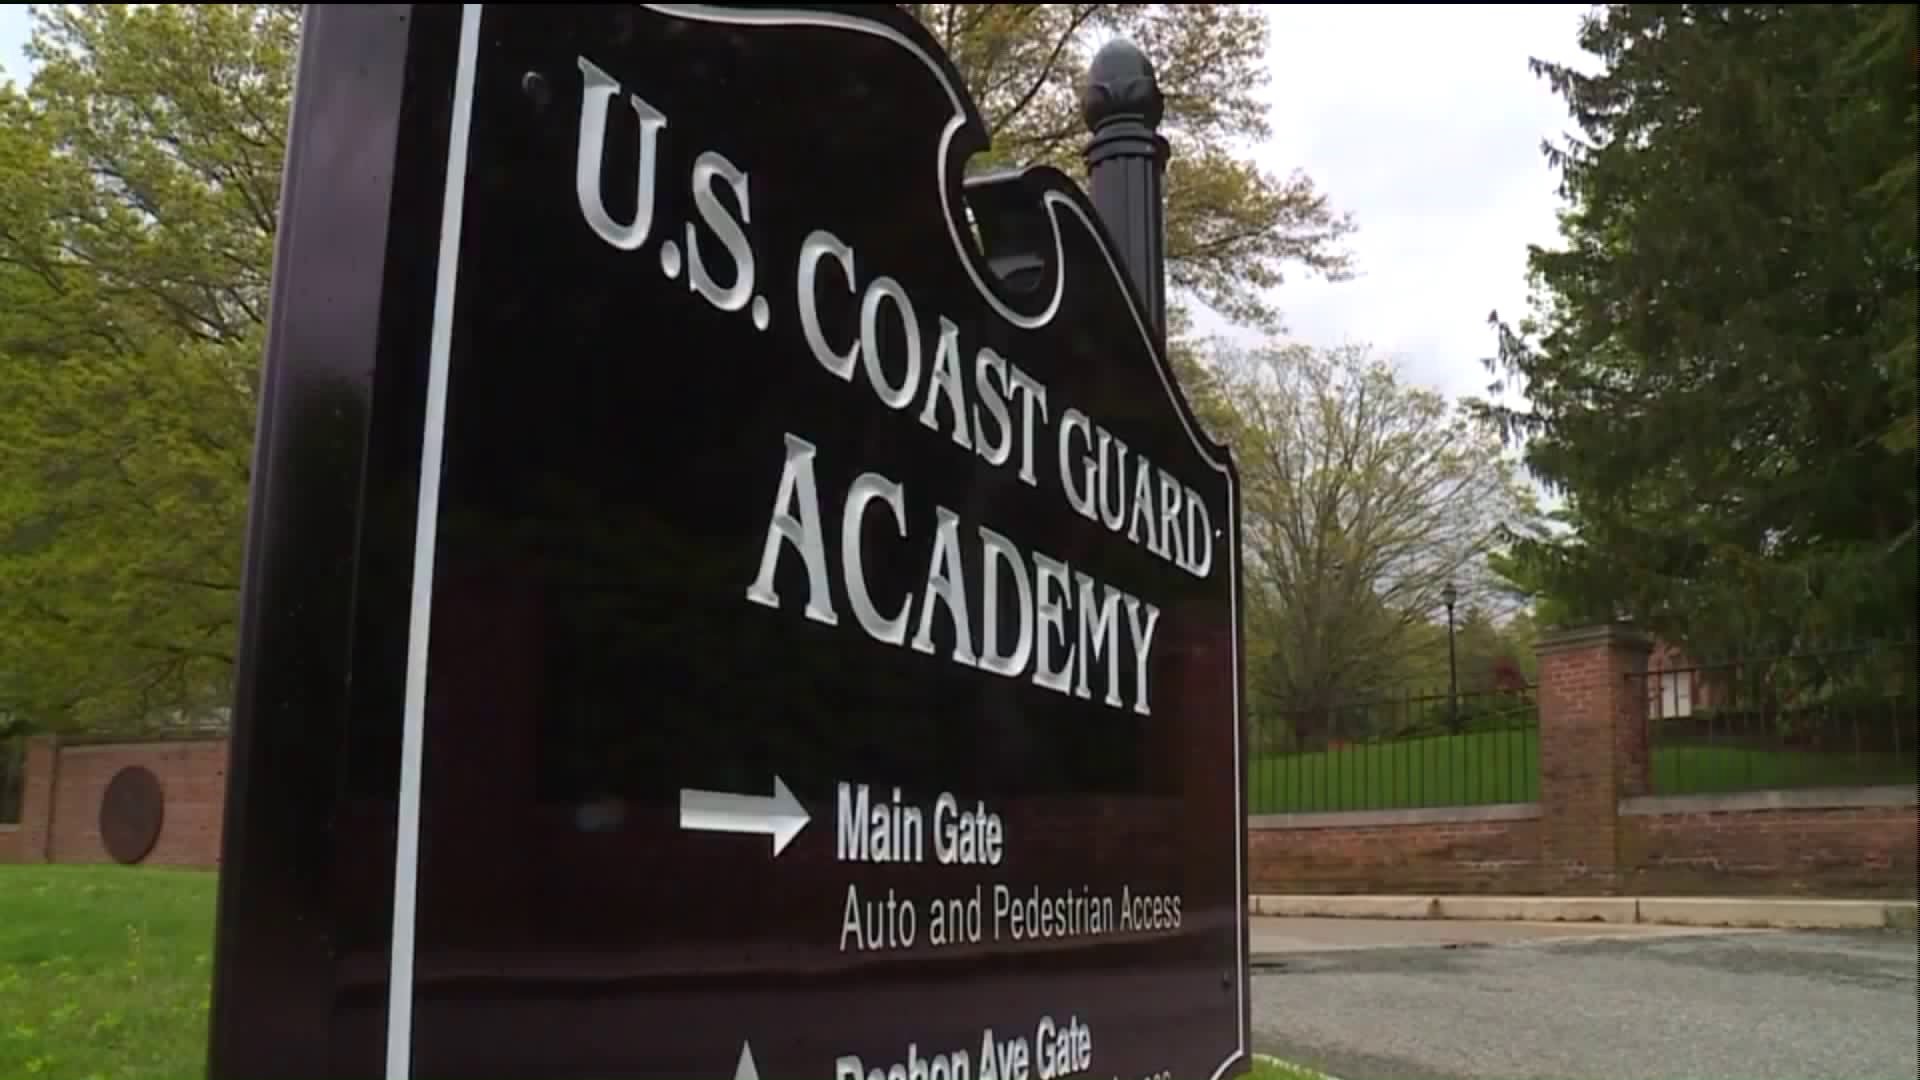 Trump coming to Coast Guard Academy